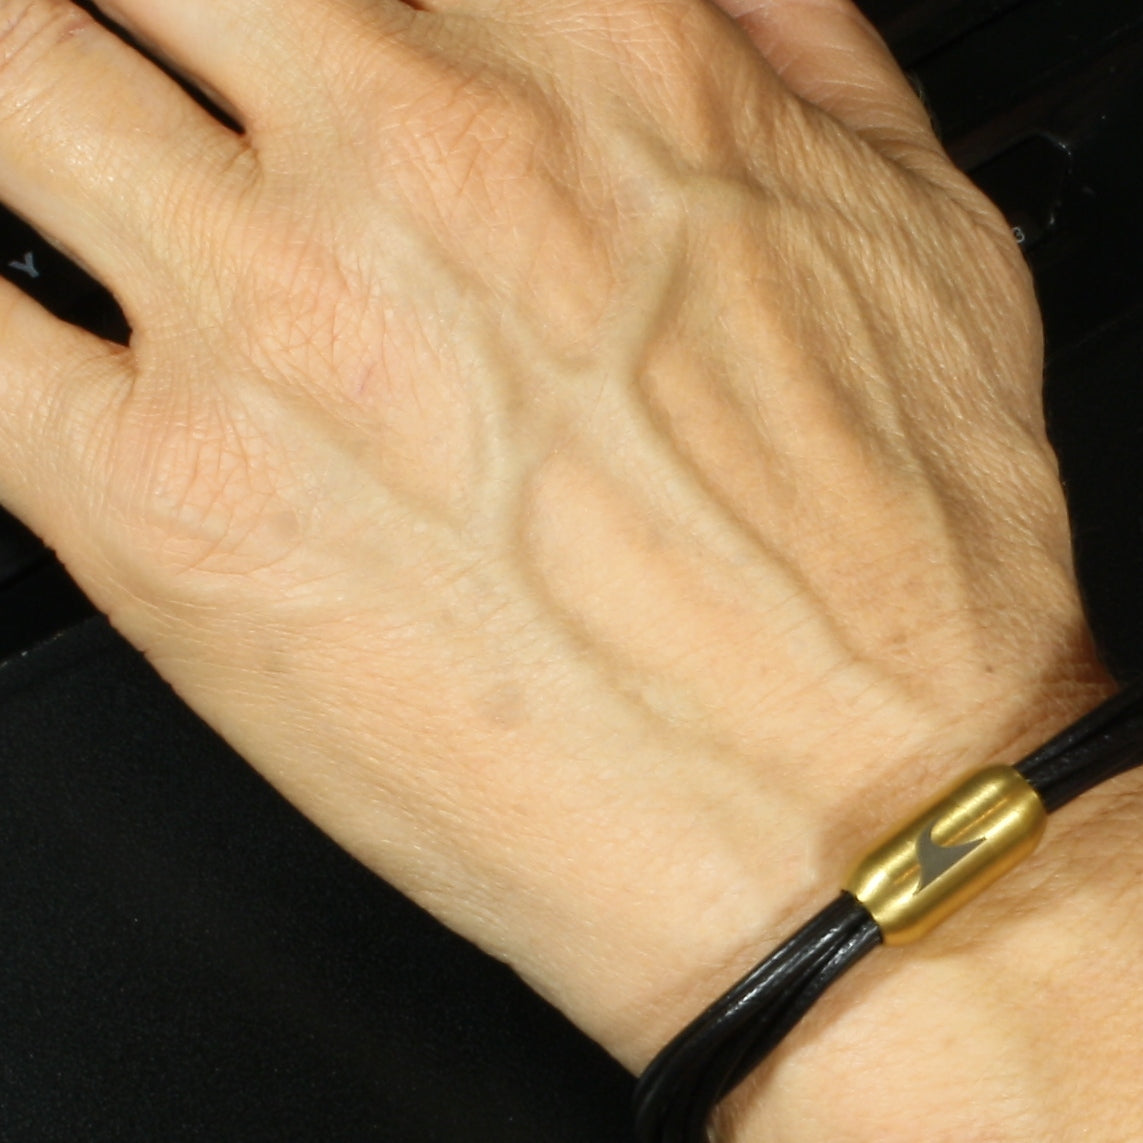 Damen-Leder-armband-fem-schwarz-gold-Edelstahlverschluss-getragen-wavepirate-shop-r